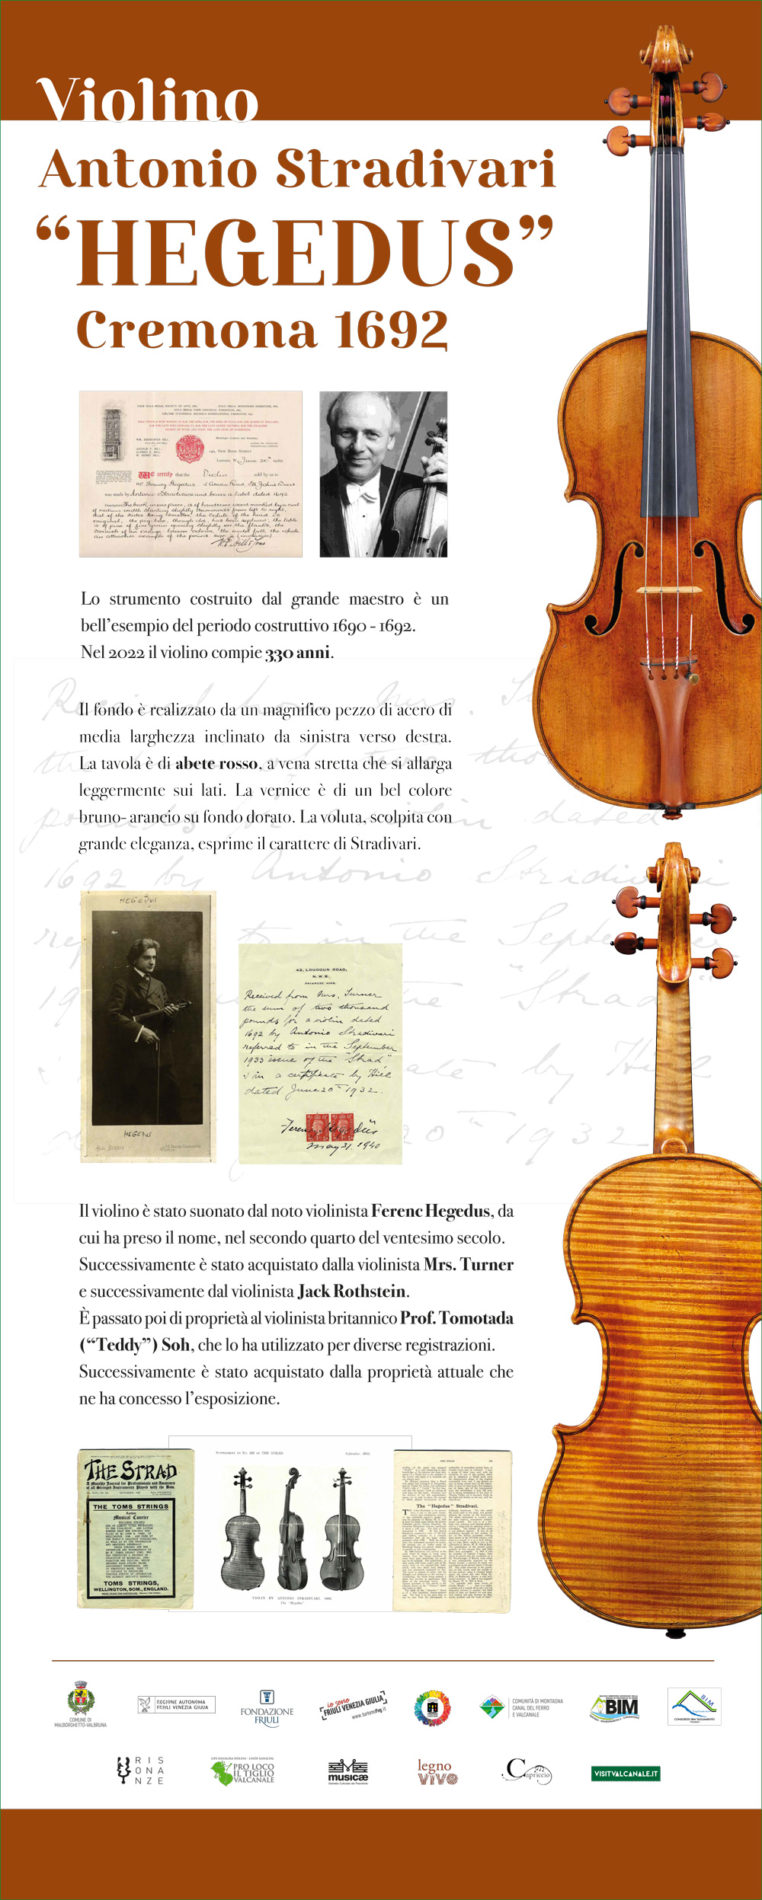 Violino Hegedus - expo banner